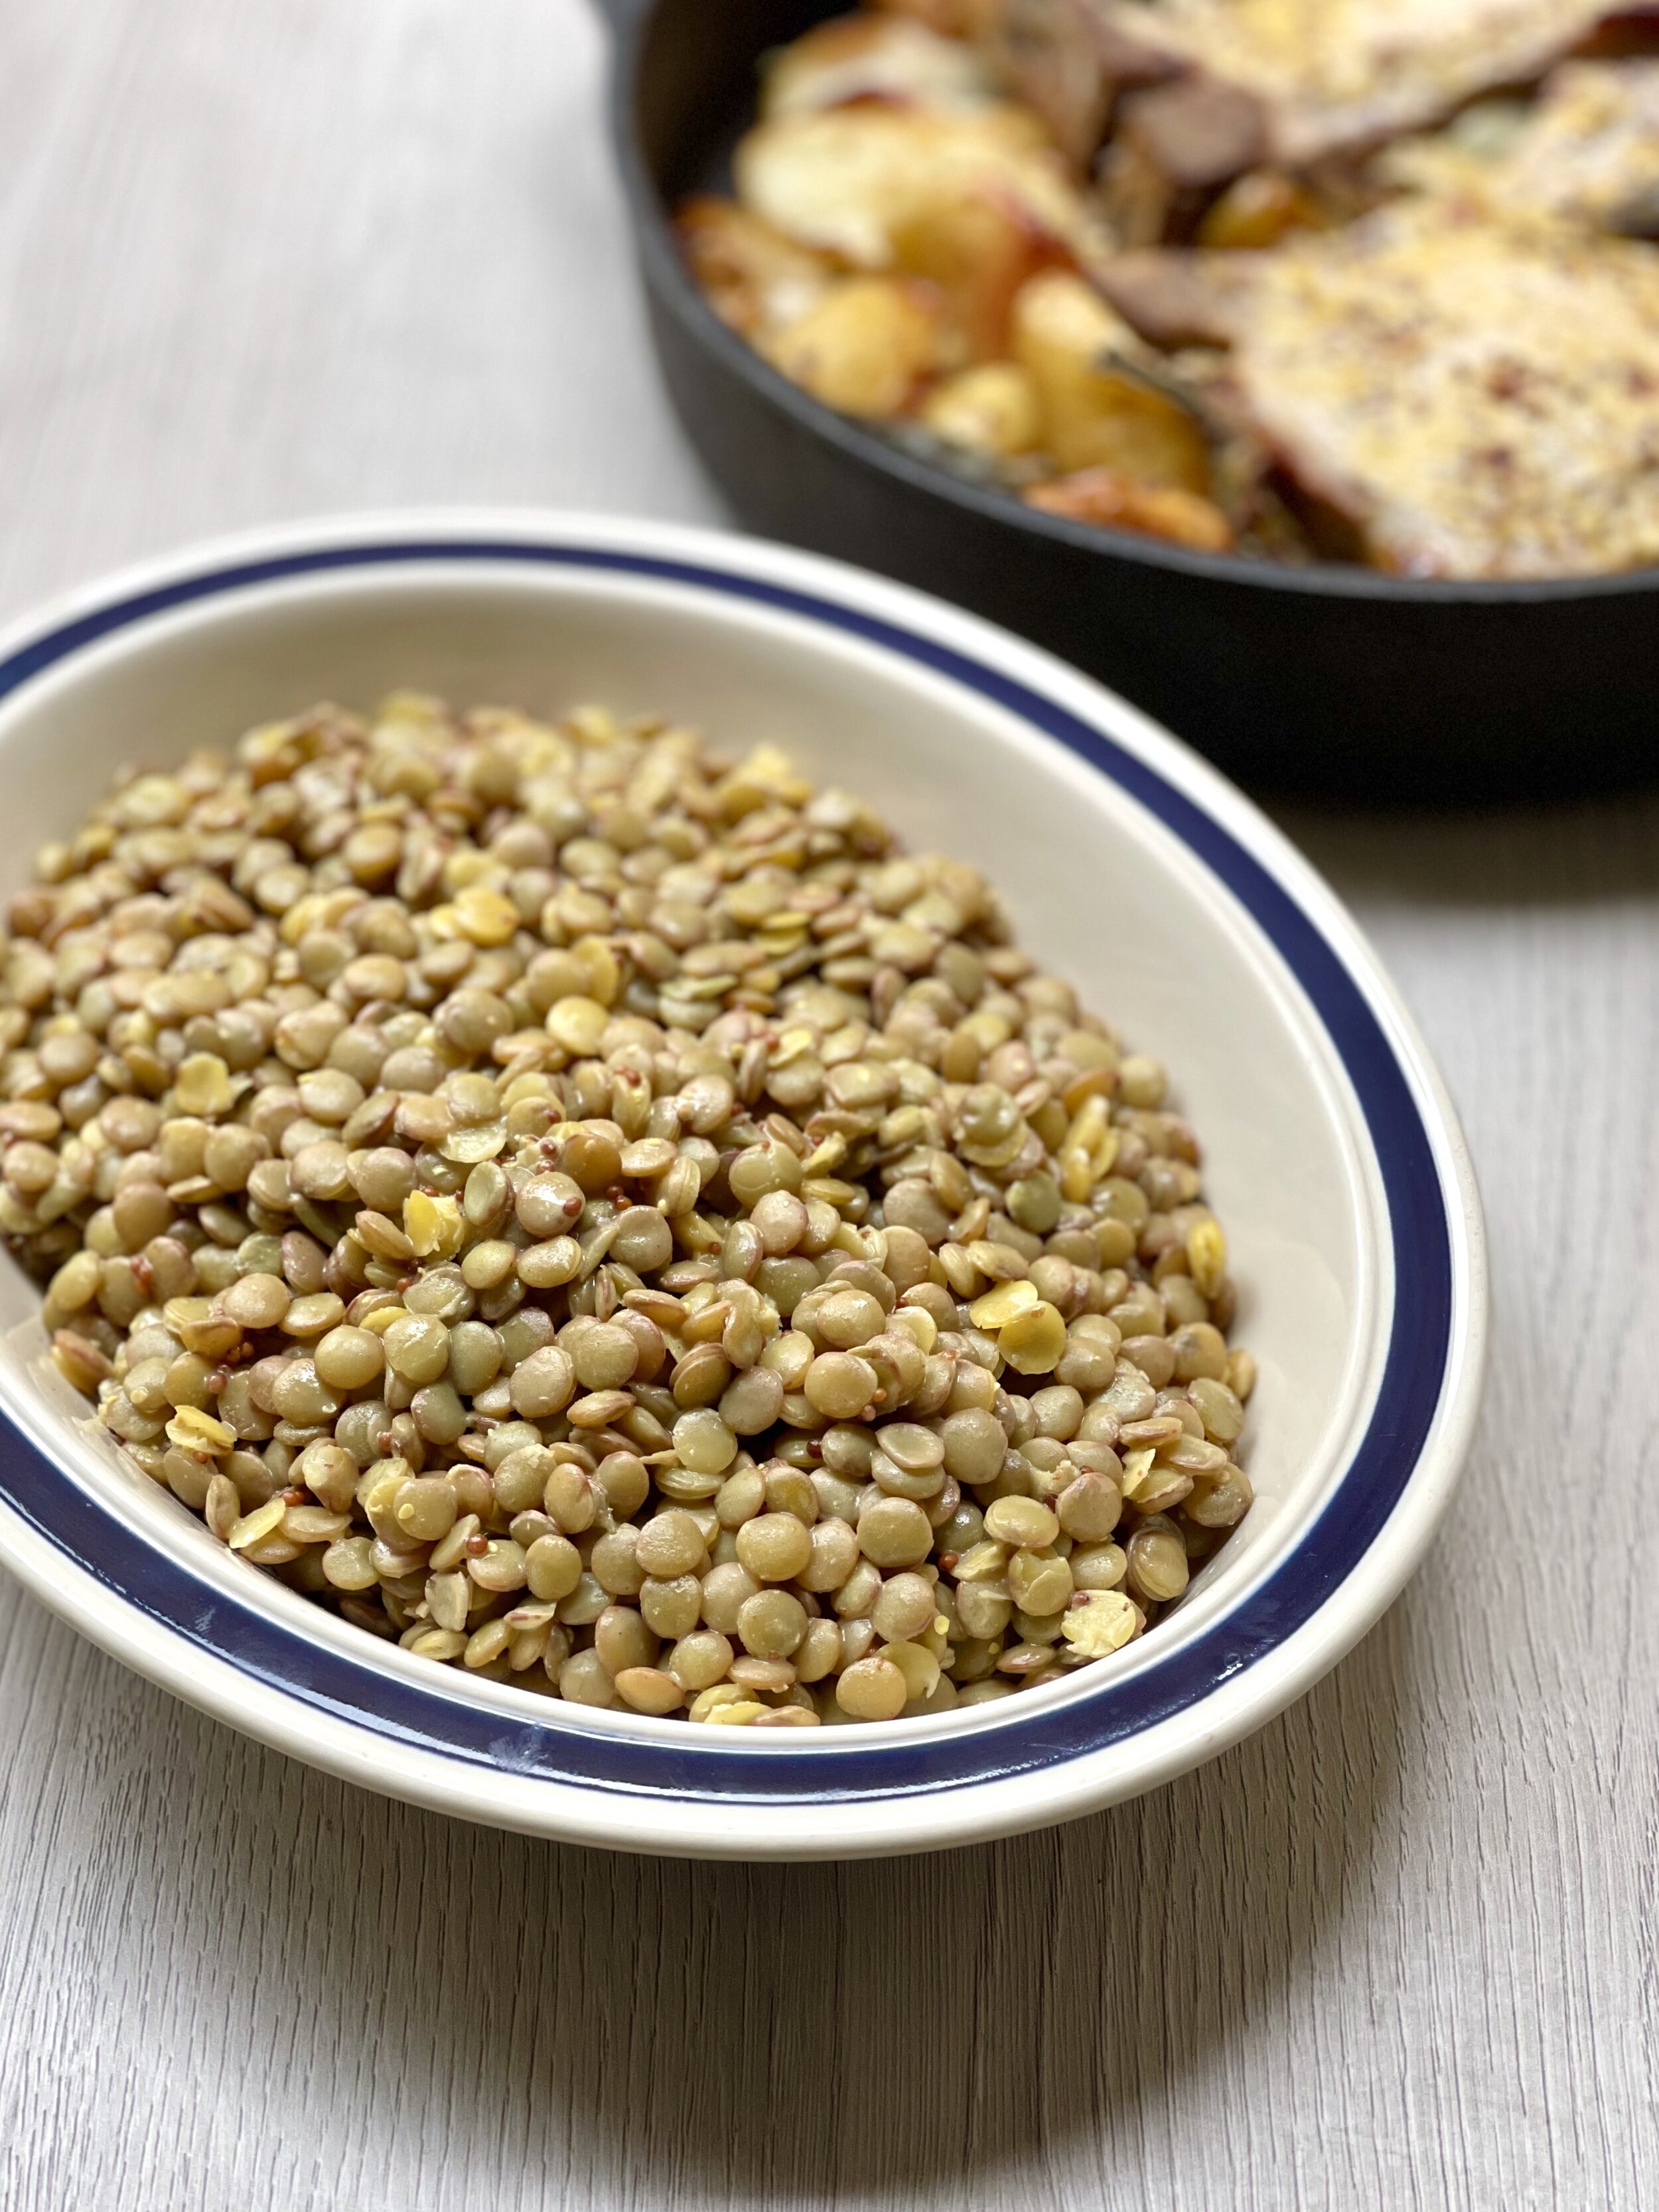 Mustard vinaigrette lentils by Joey and Katy